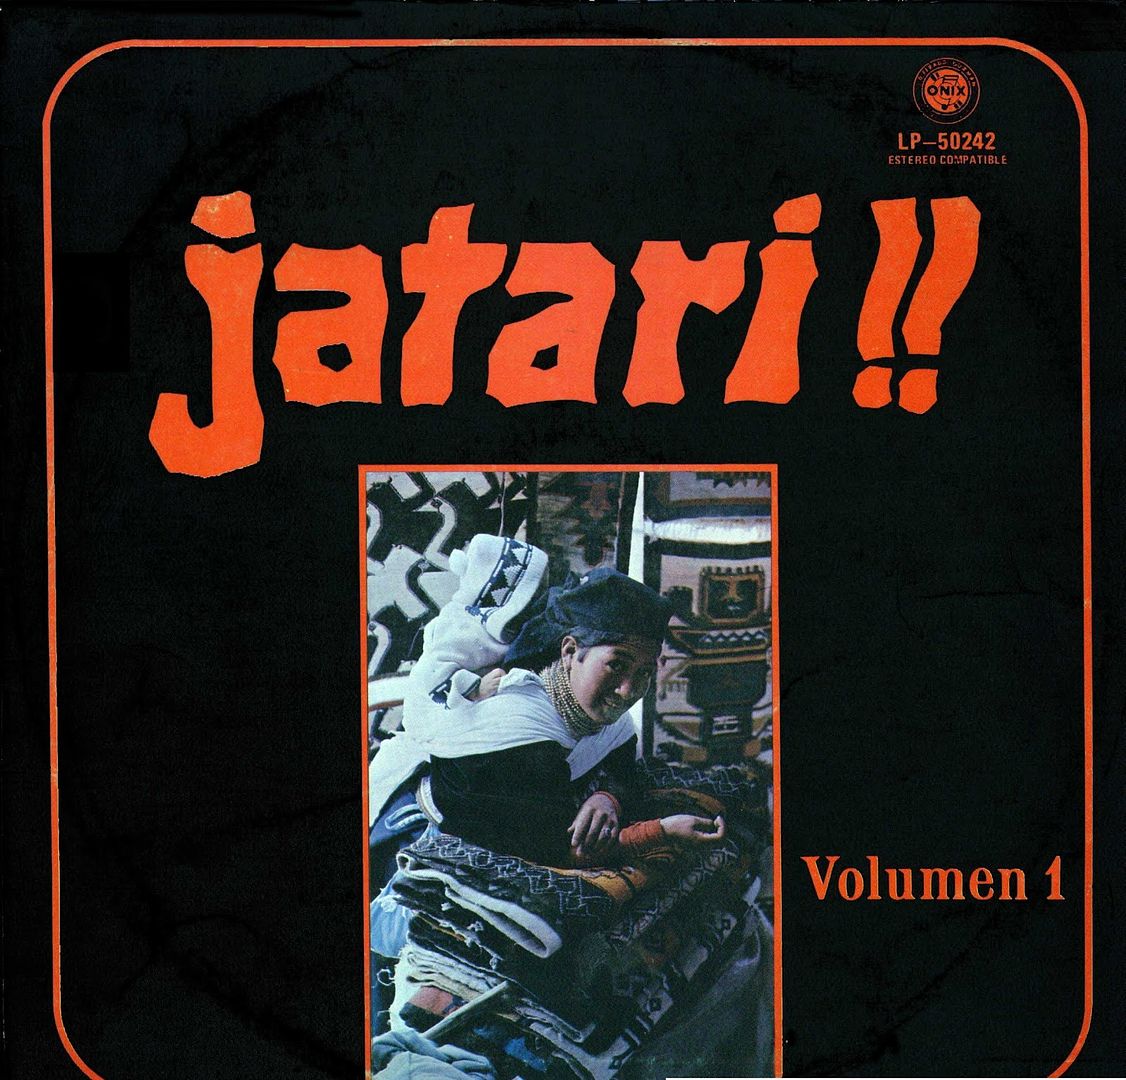 JATARIVOL1 - Jatari Vol 1